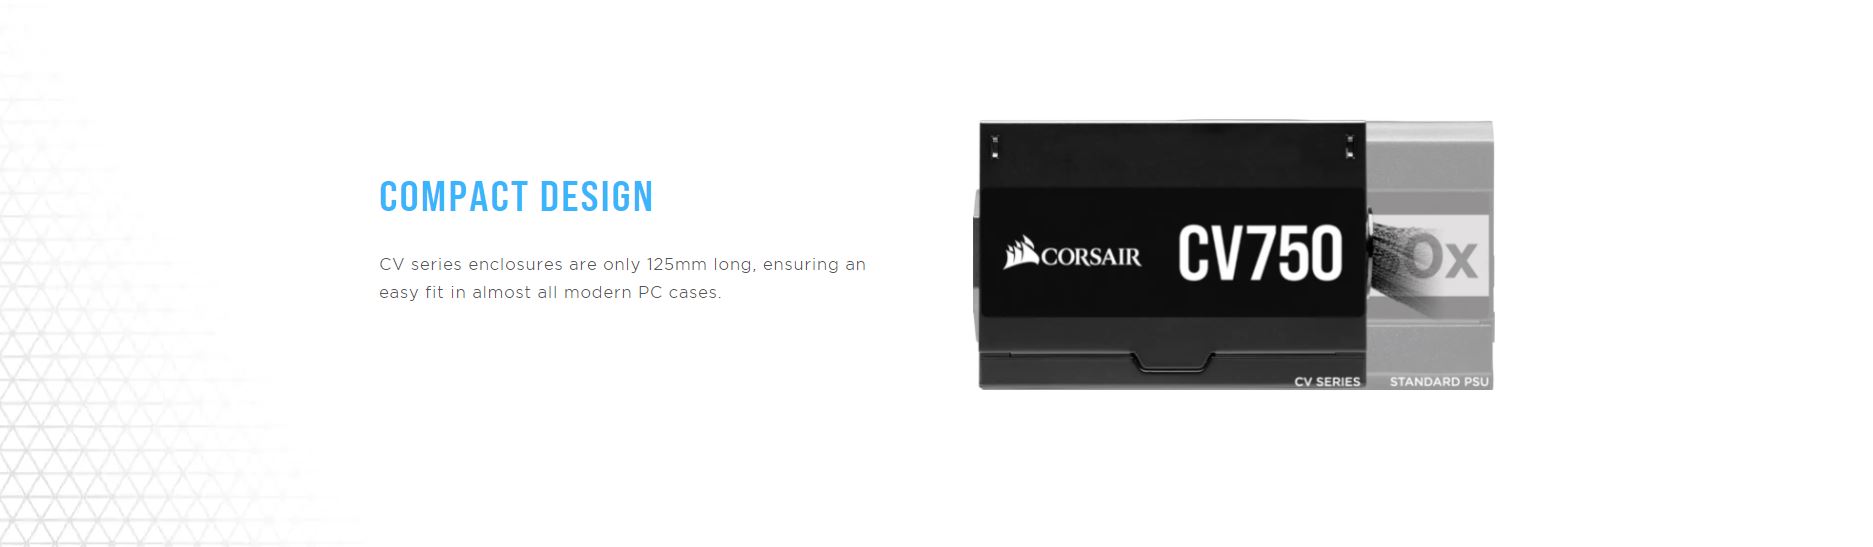 Nguồn Corsair Series CV750 750 W giới thiệu